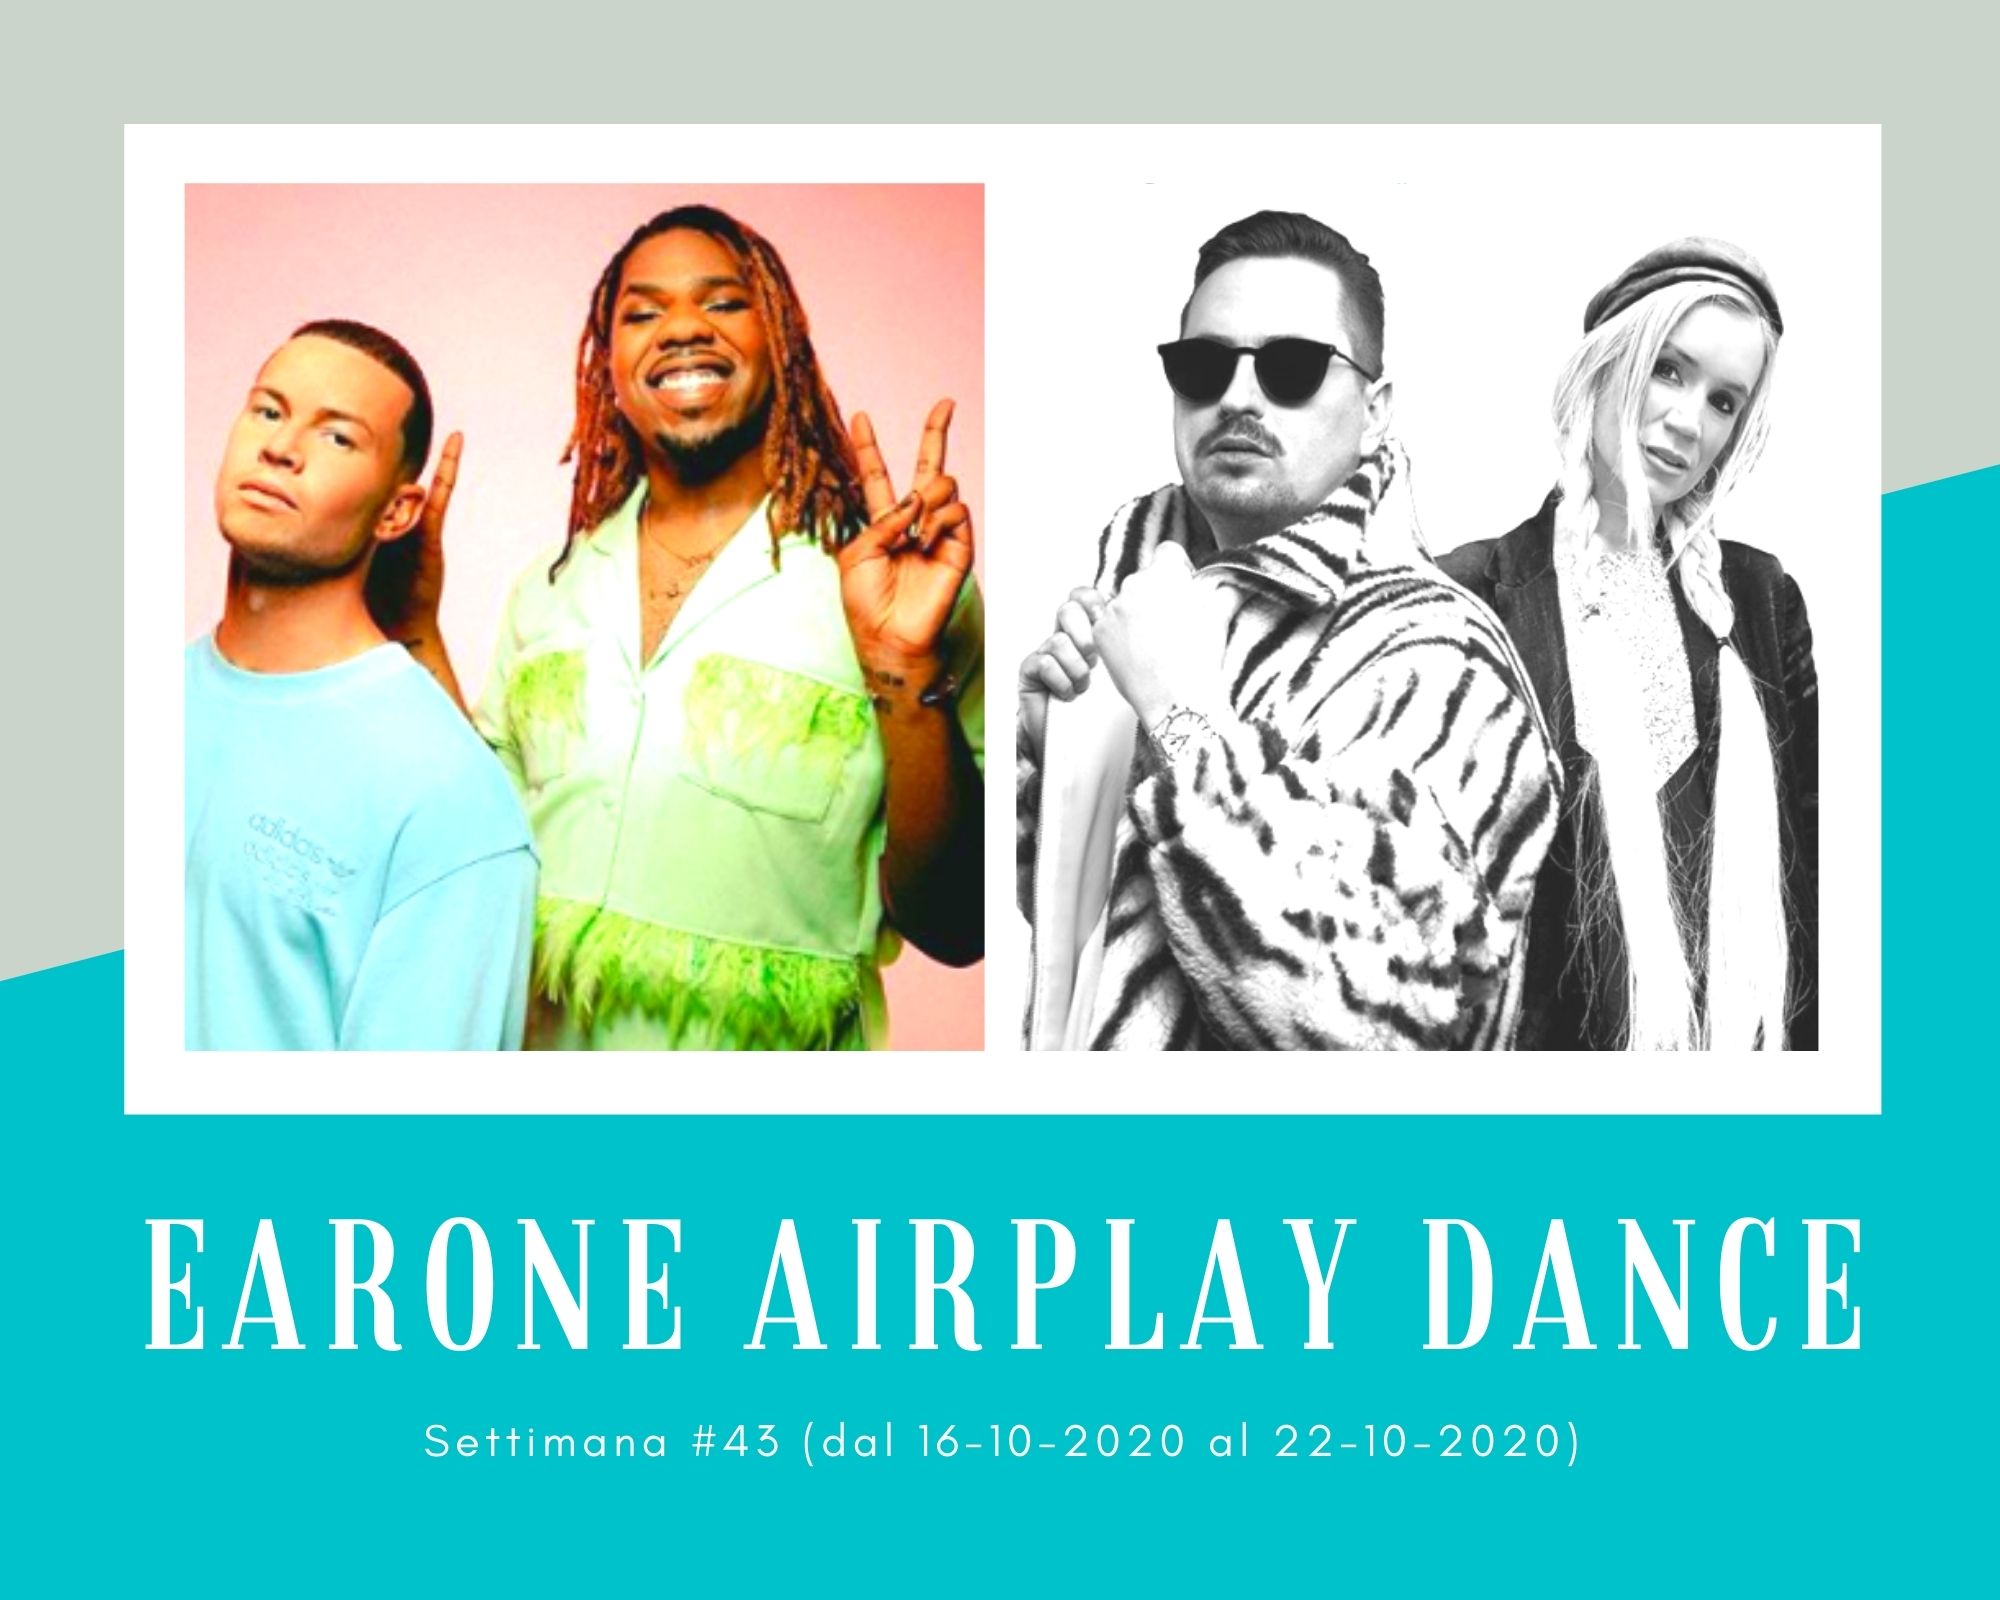 Classifica Radio EARONE Airplay Dance, week 43. Freezata in vetta l&#8217;accoppiata LGBT Joel Corry &#038; Mnek. Robin Shultz ci prova con Kiddo